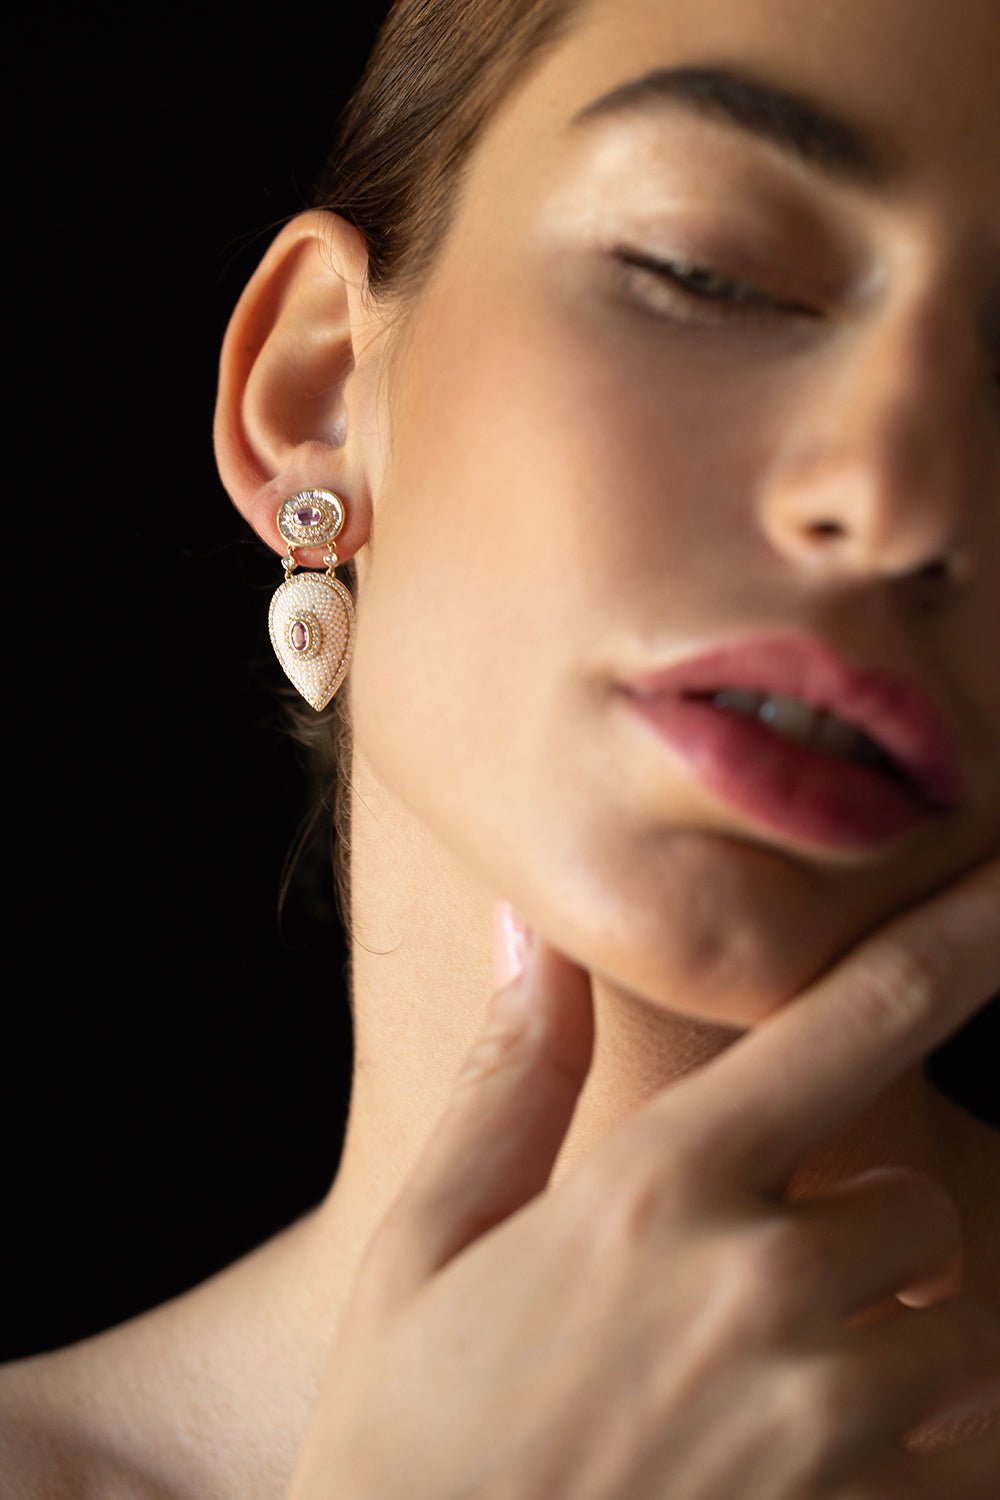 Bombay Keshi Pearl and Pink Sapphire Earrings JEWELRYFINE JEWELEARRING MOKSH   